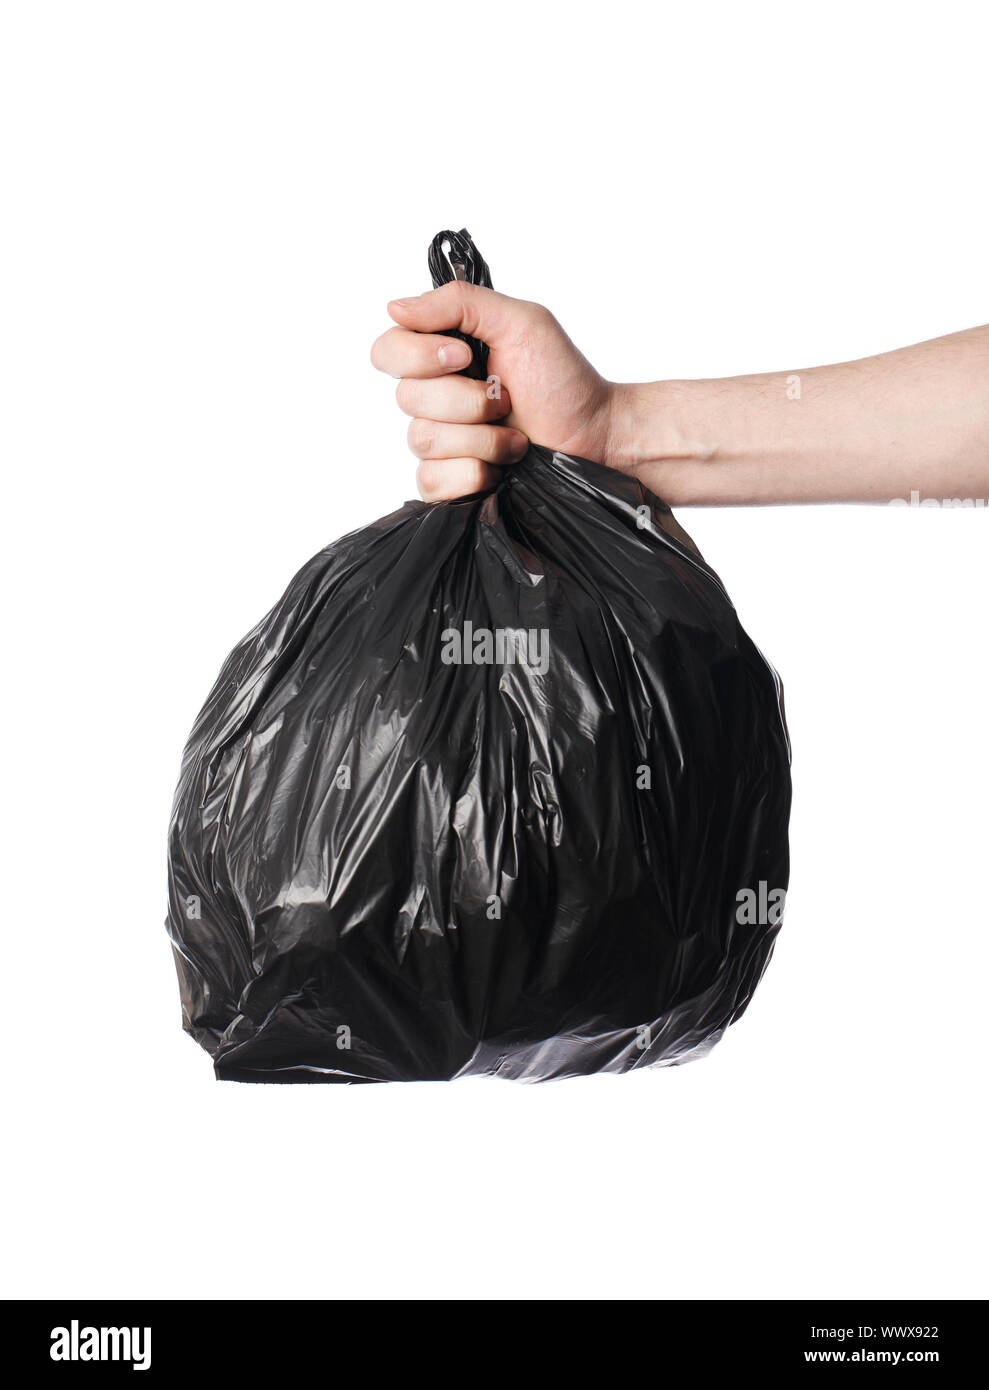 https://c8.alamy.com/comp/WWX922/man-holding-a-full-black-plastic-trash-bag-in-his-hand-WWX922.jpg